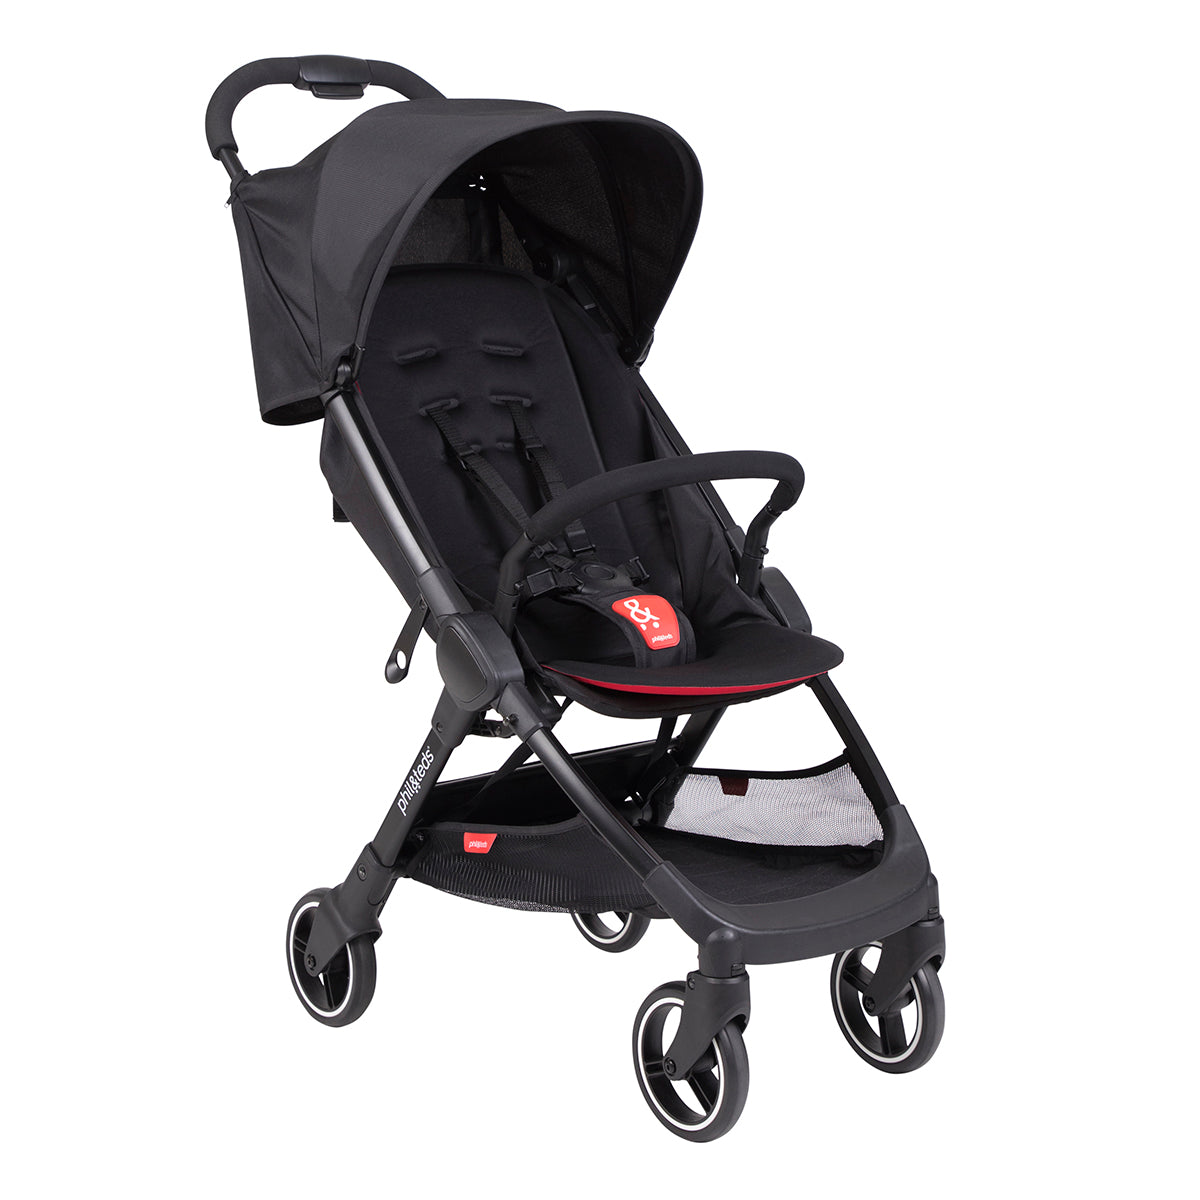 lightest newborn stroller